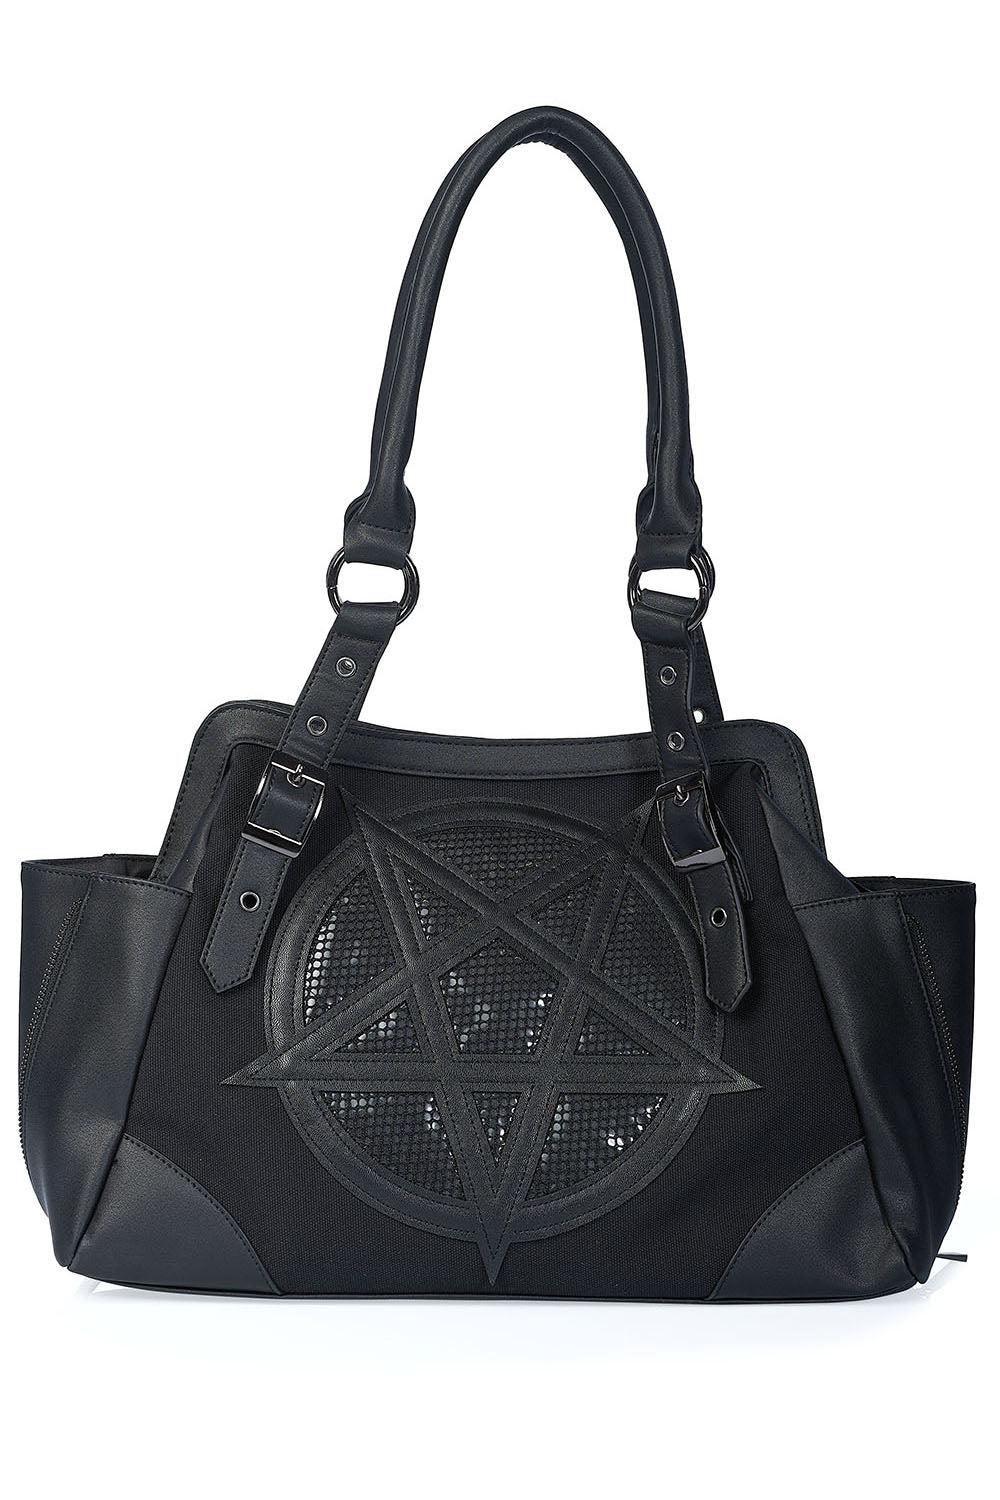 Satan's Hell Handbag-Banned-Dark Fashion Clothing